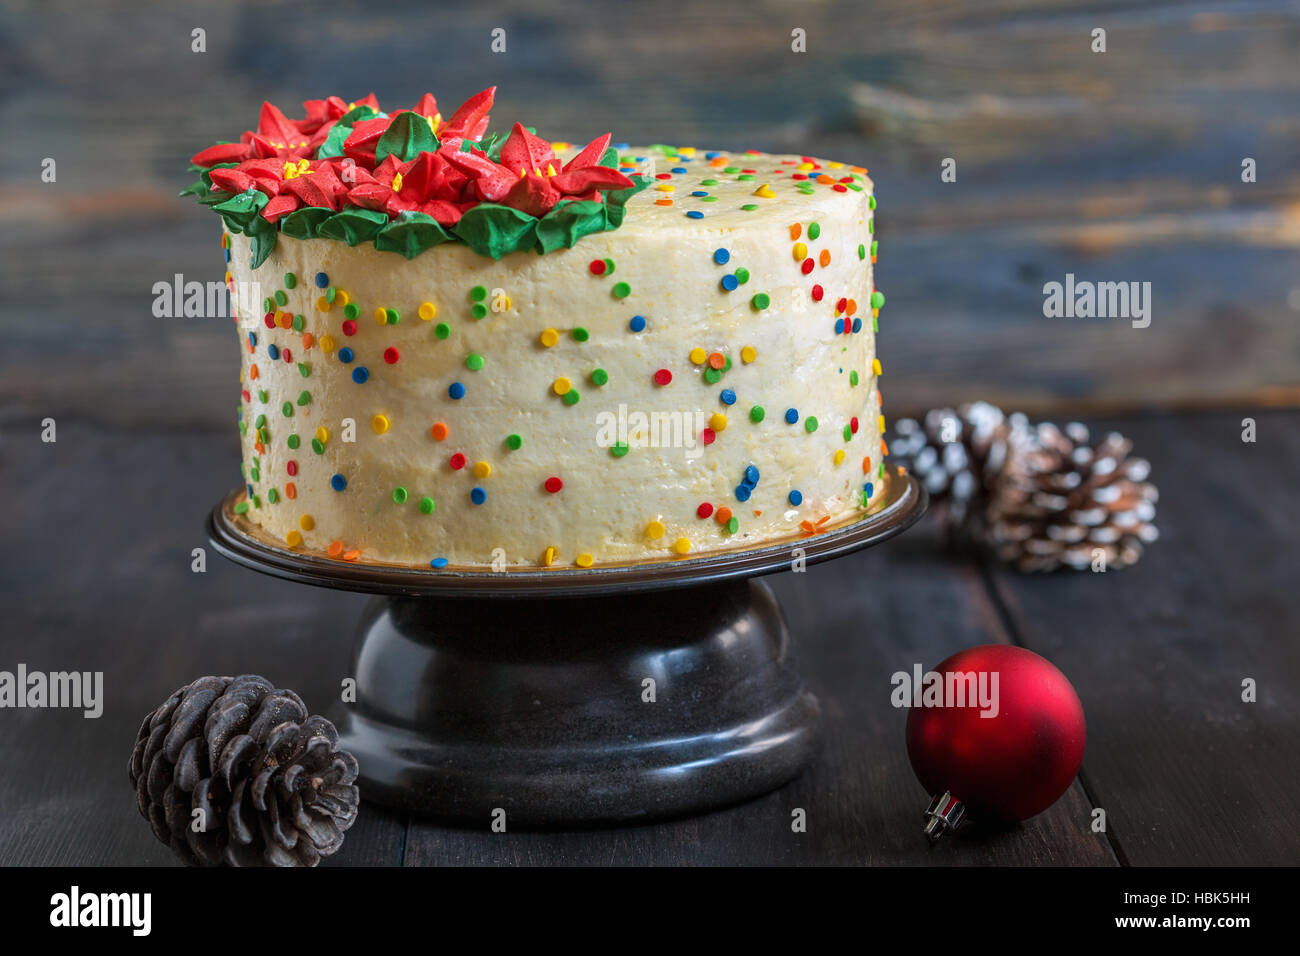 Cake with Christmas decor. Stock Photo